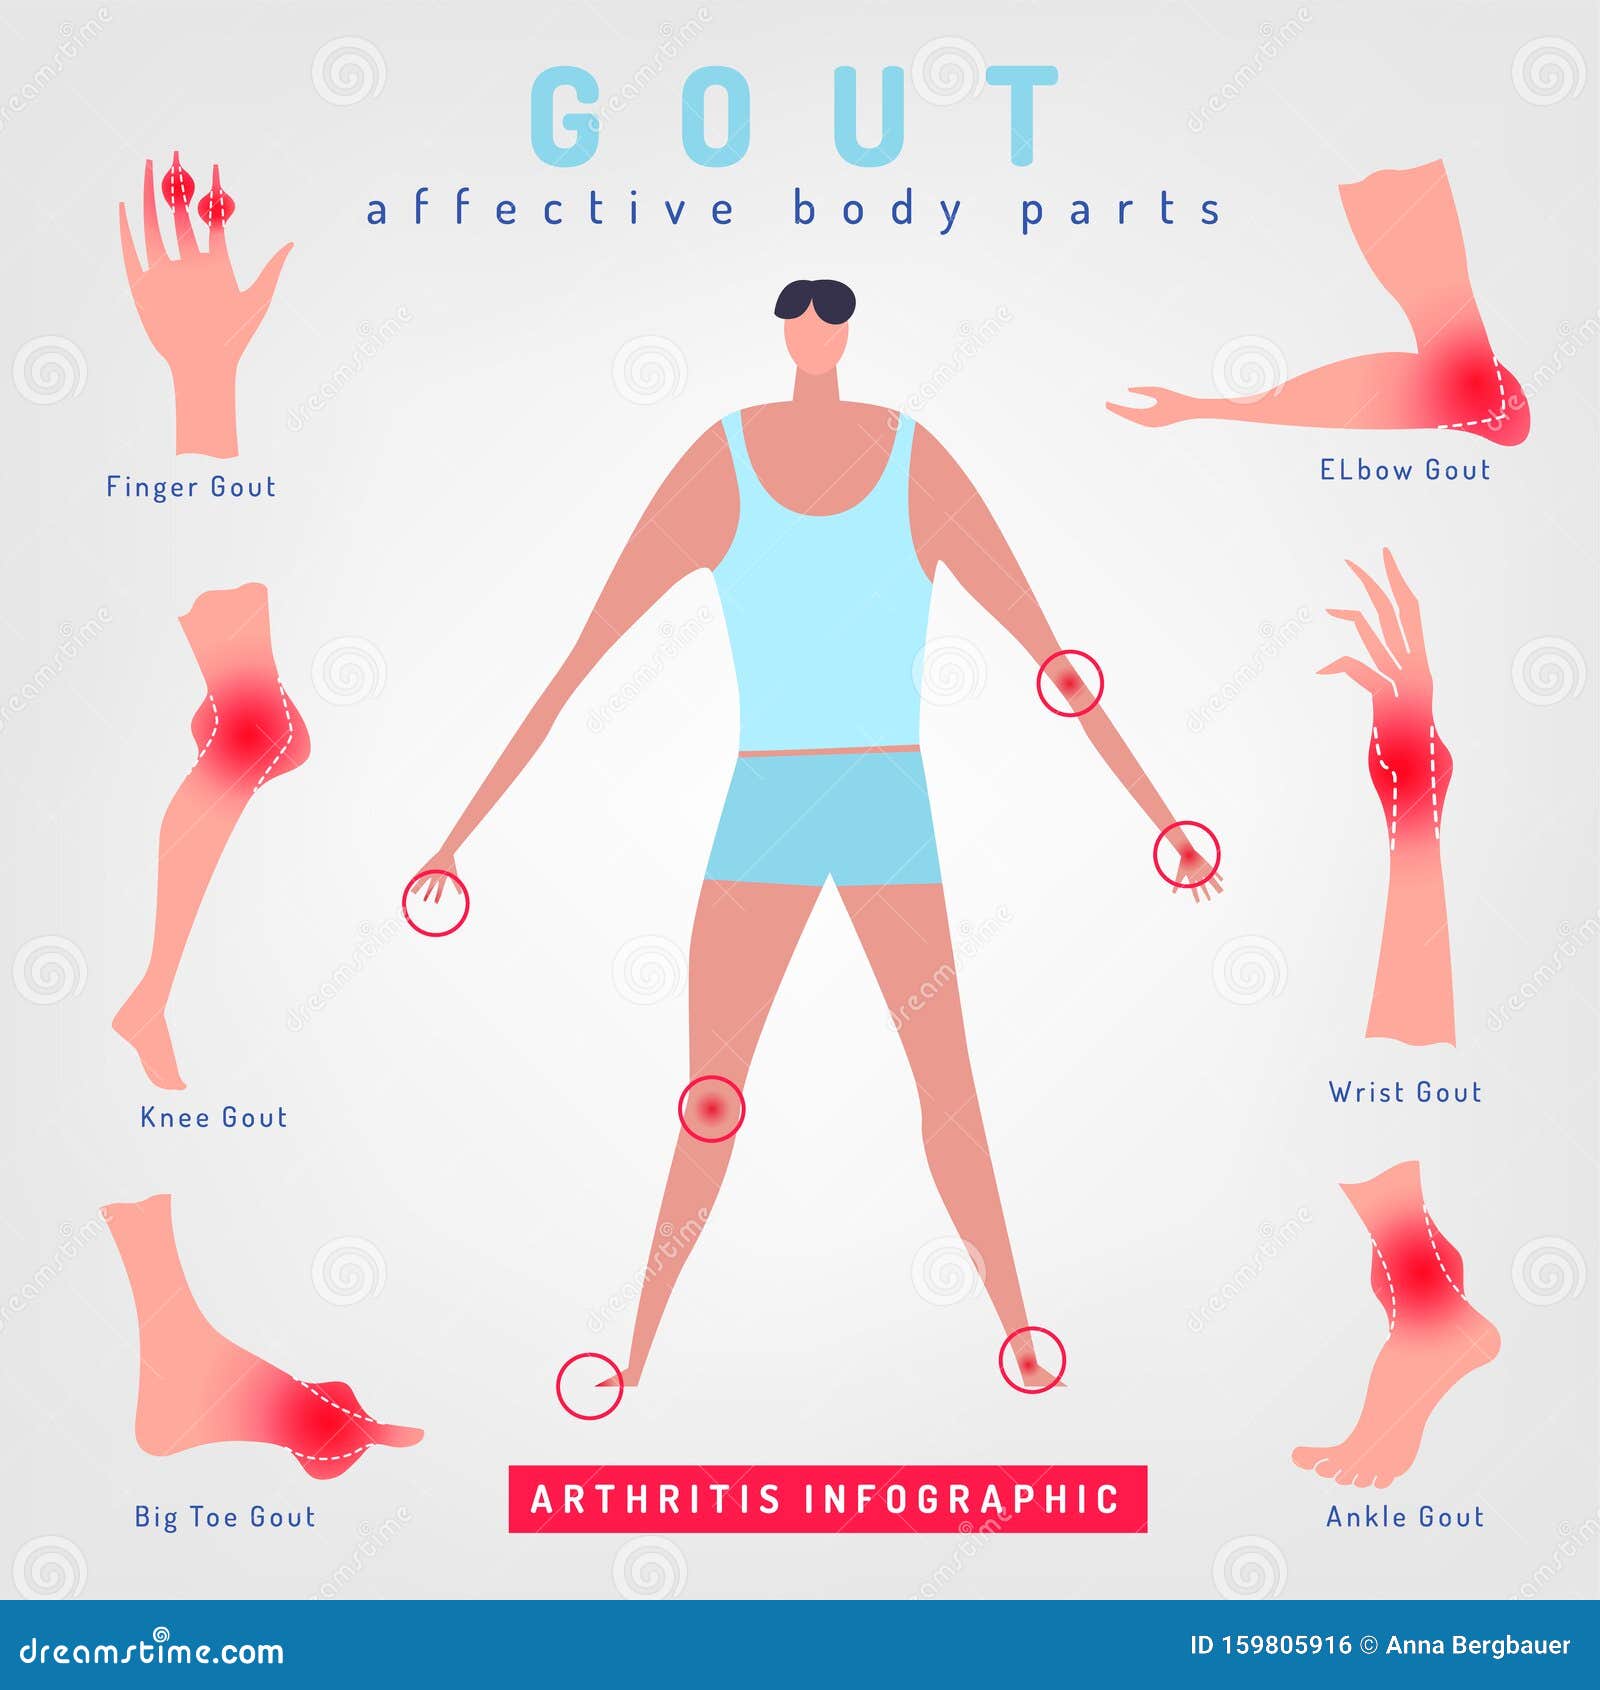 gout arthritis infographic